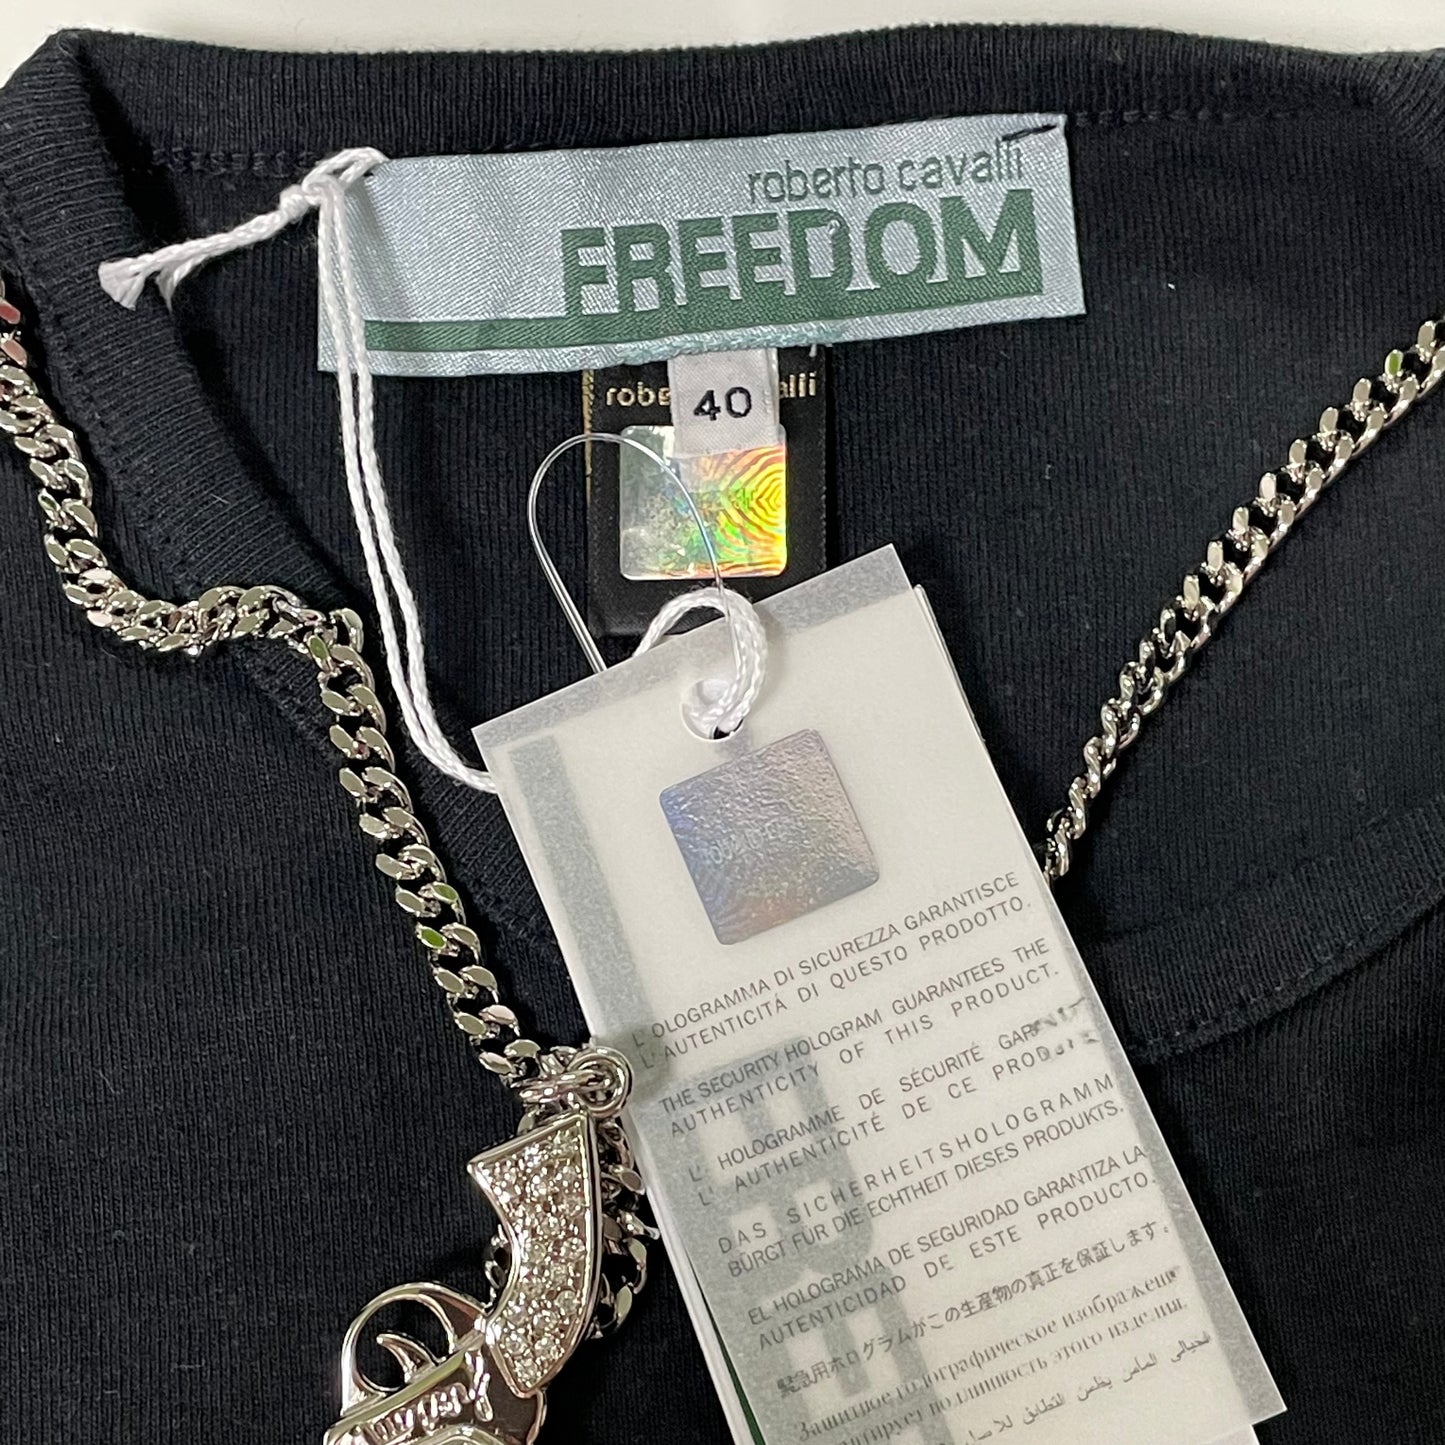 ROBERTO CAVALLI "Freedom" Logo Swarovski Embellished Pistol Chain Tank Top